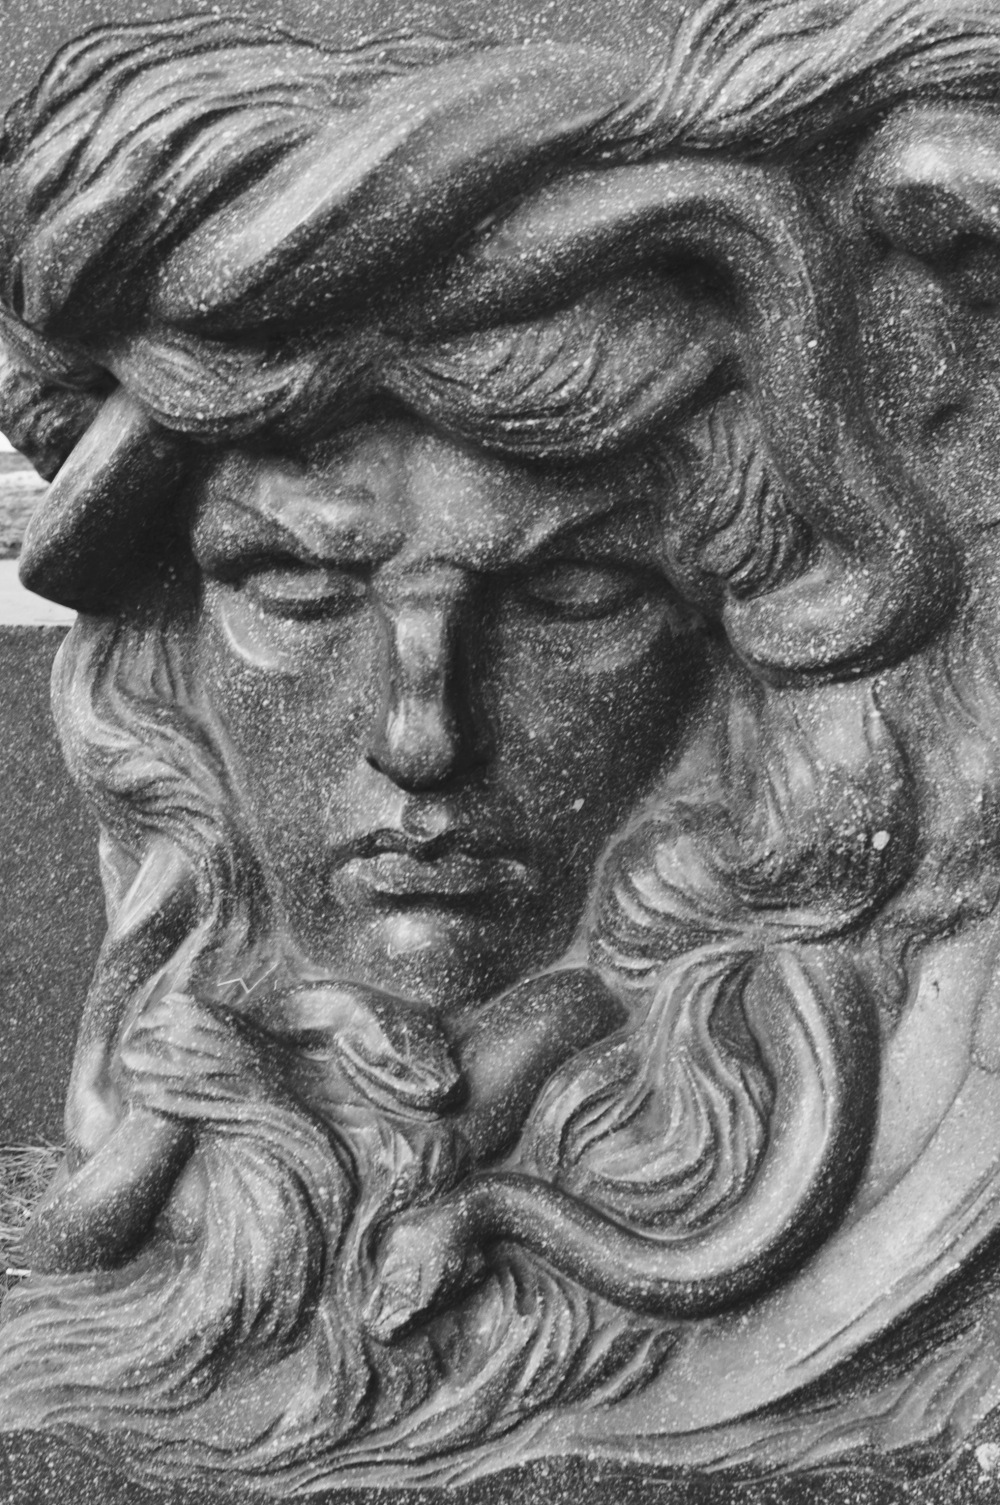 Edoardo Rubino, Medusa for the monument dedicated to Umberto I in Villa Borghese, Roma 1914. 67cc8a636667fff95c0db90639edca65 - 1414583459.978566.IMG_4317